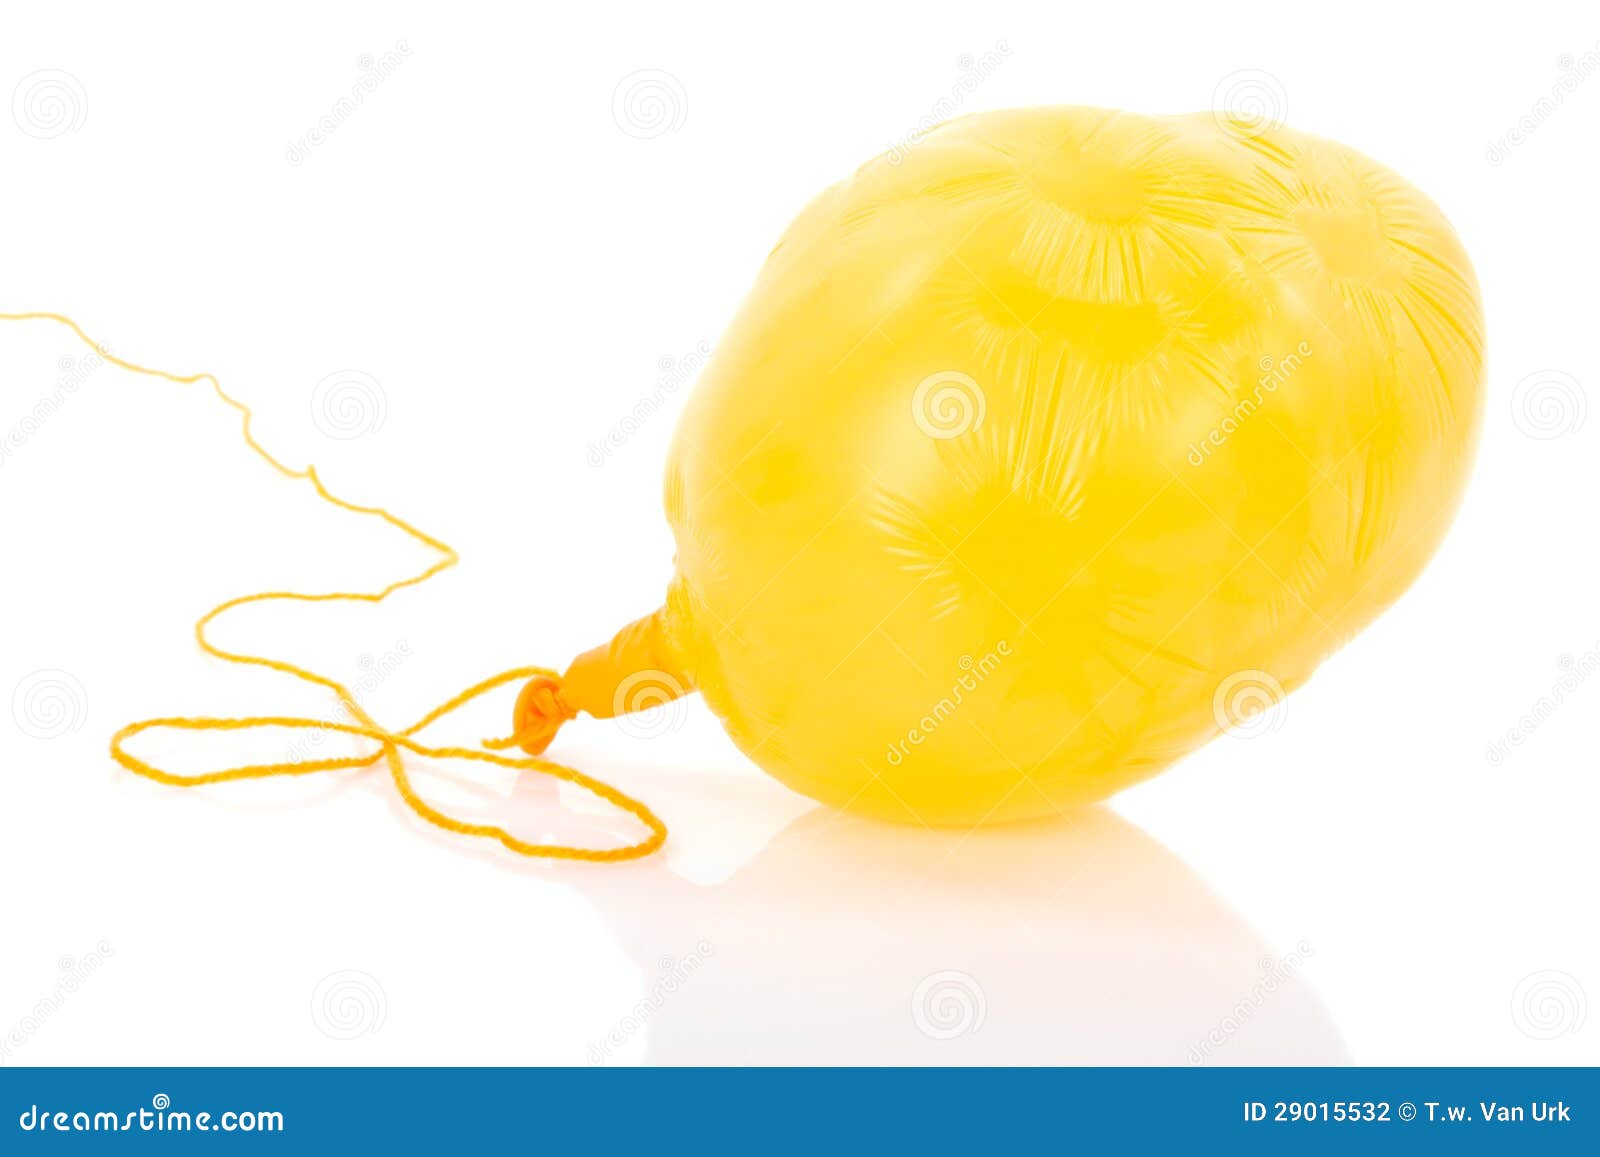 deflated balloon clip art - photo #15